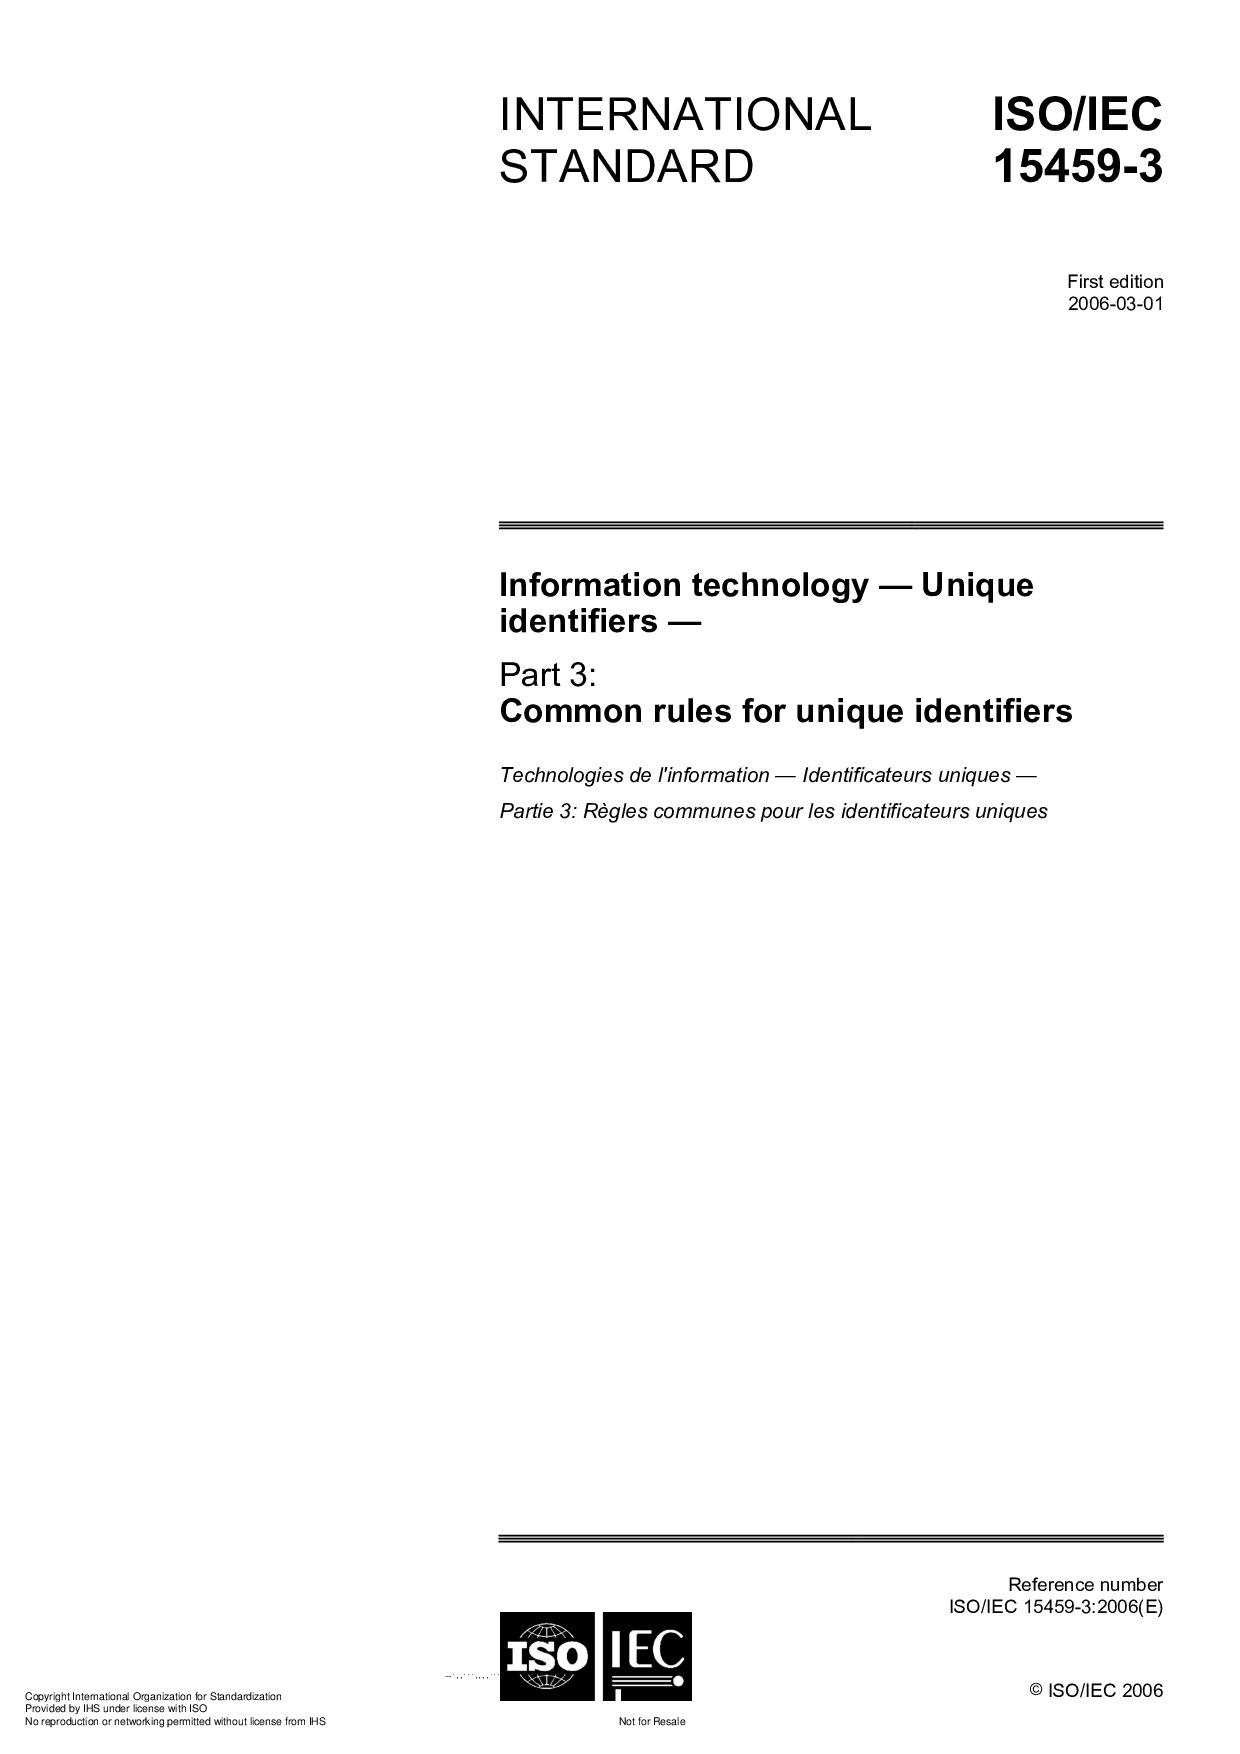 ISO/IEC 15459-3:2006